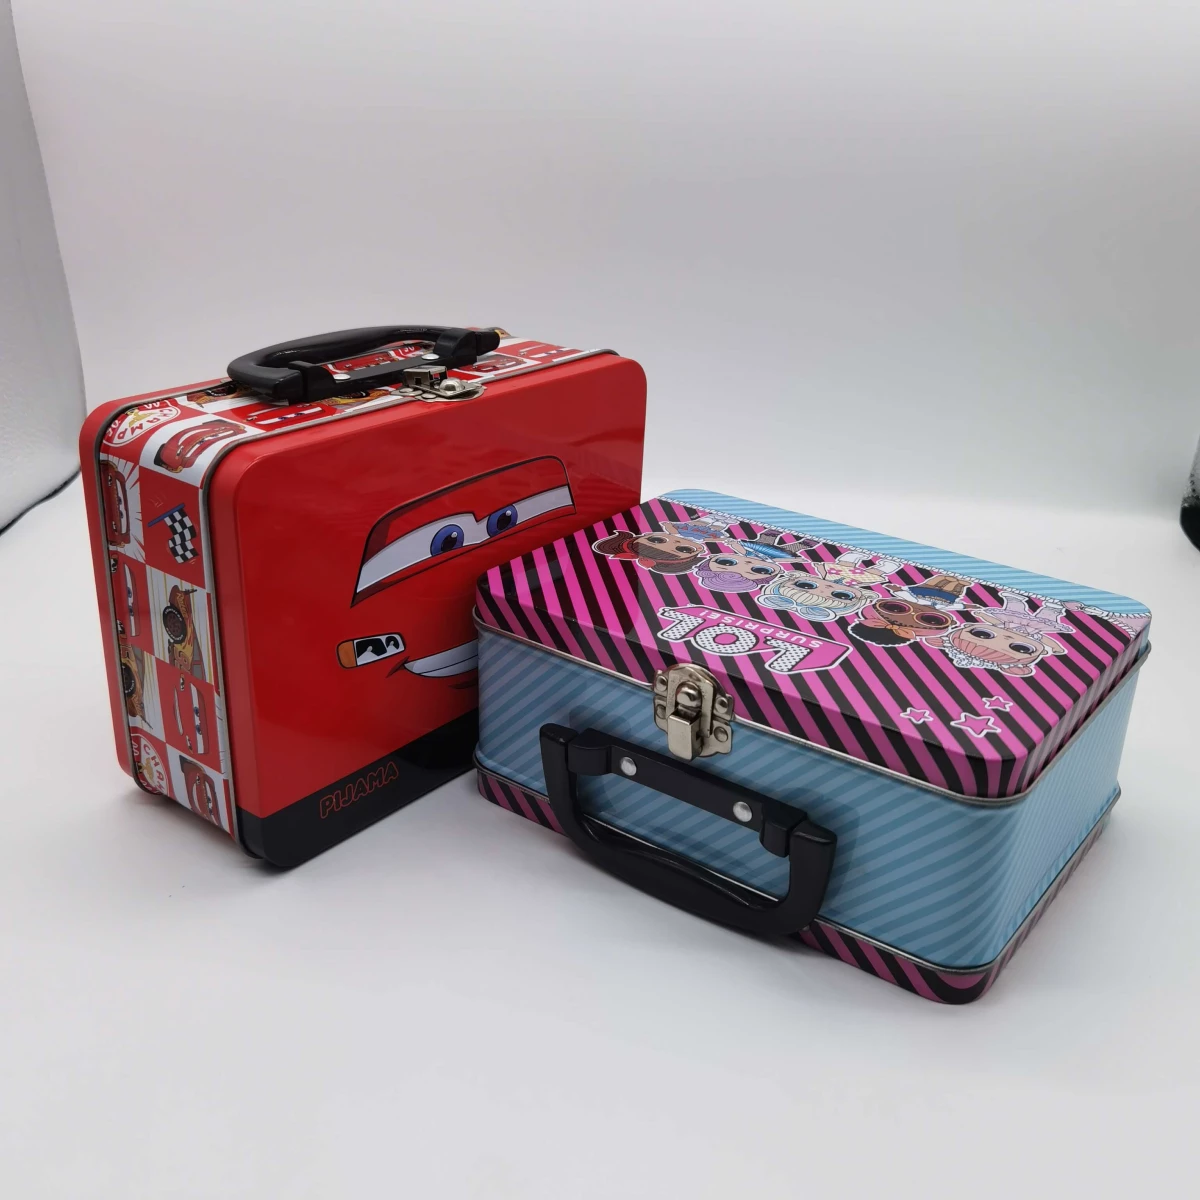 China cosmetic tin box with handle Manufacturers, Factory - Buy cosmetic tin box with handle at Good Price - Haohang